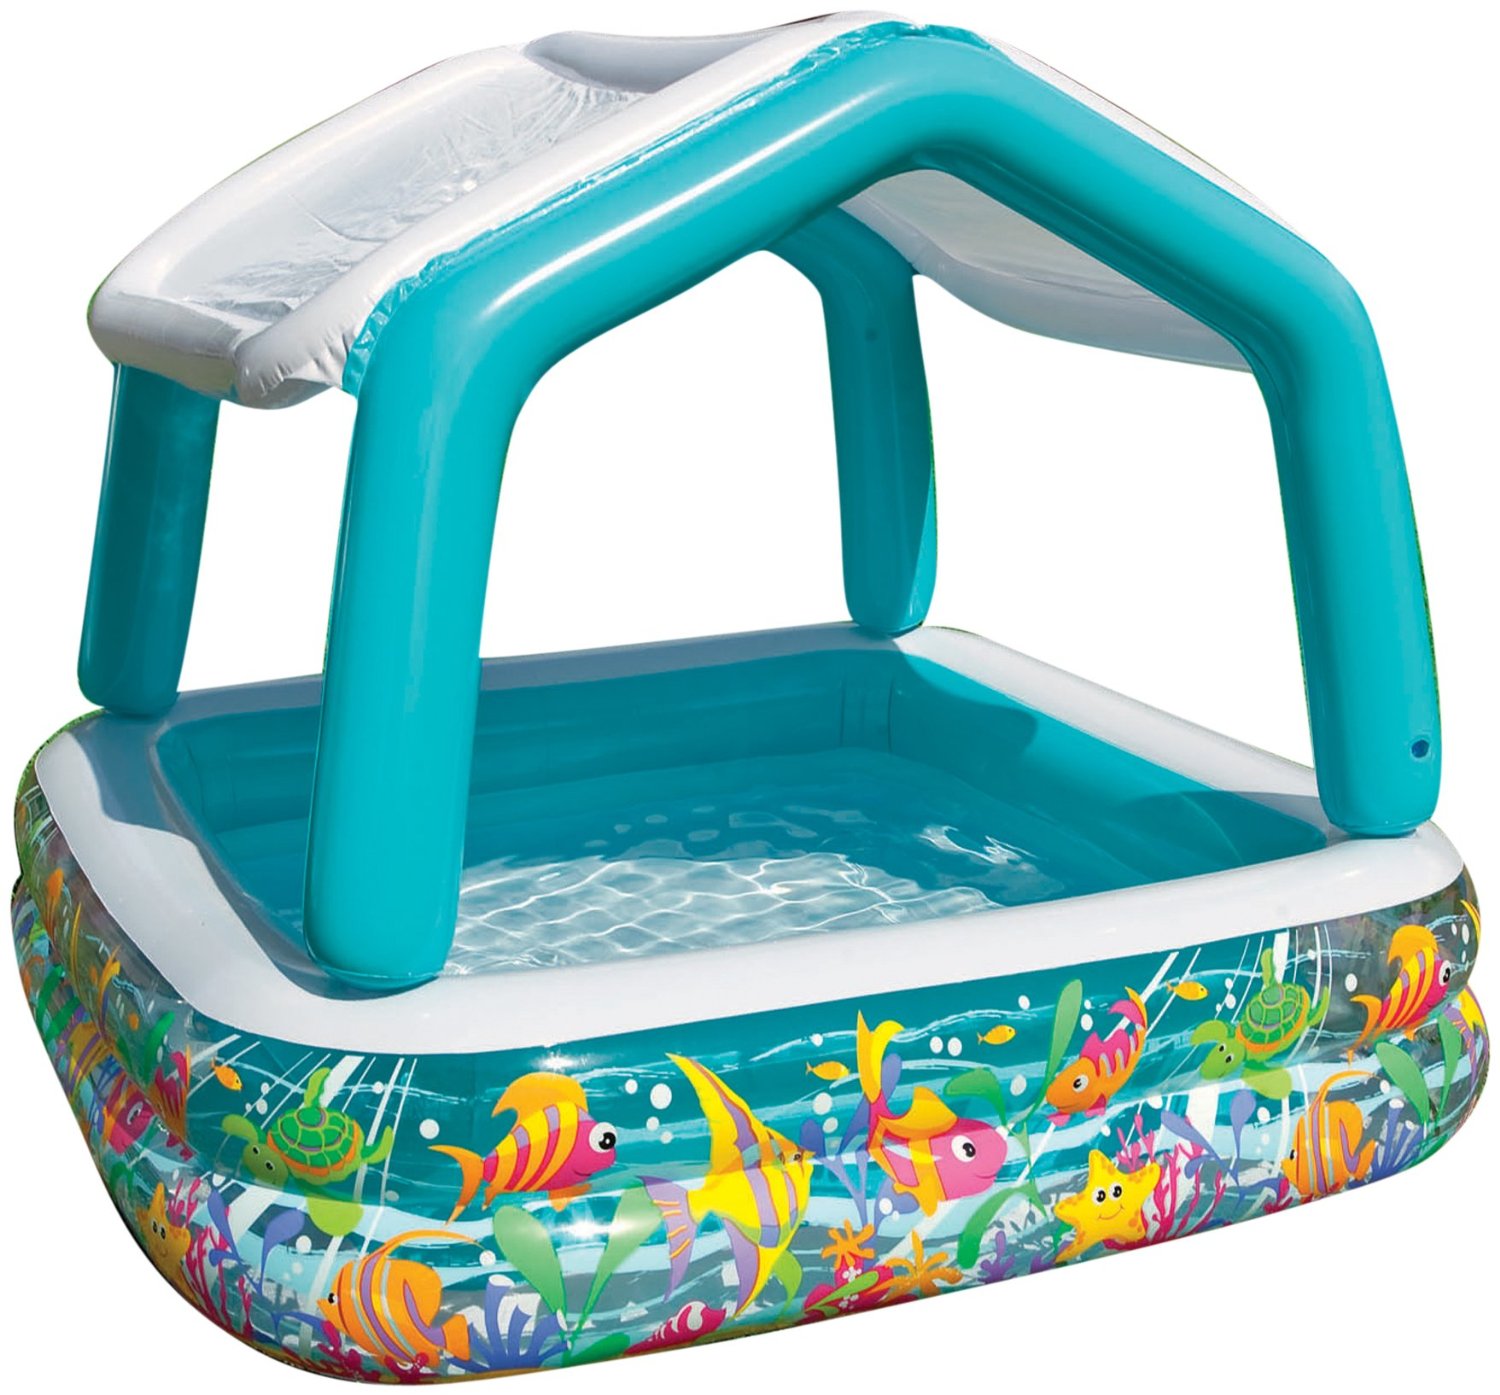 Intex Sun Shade Inflatable Pool